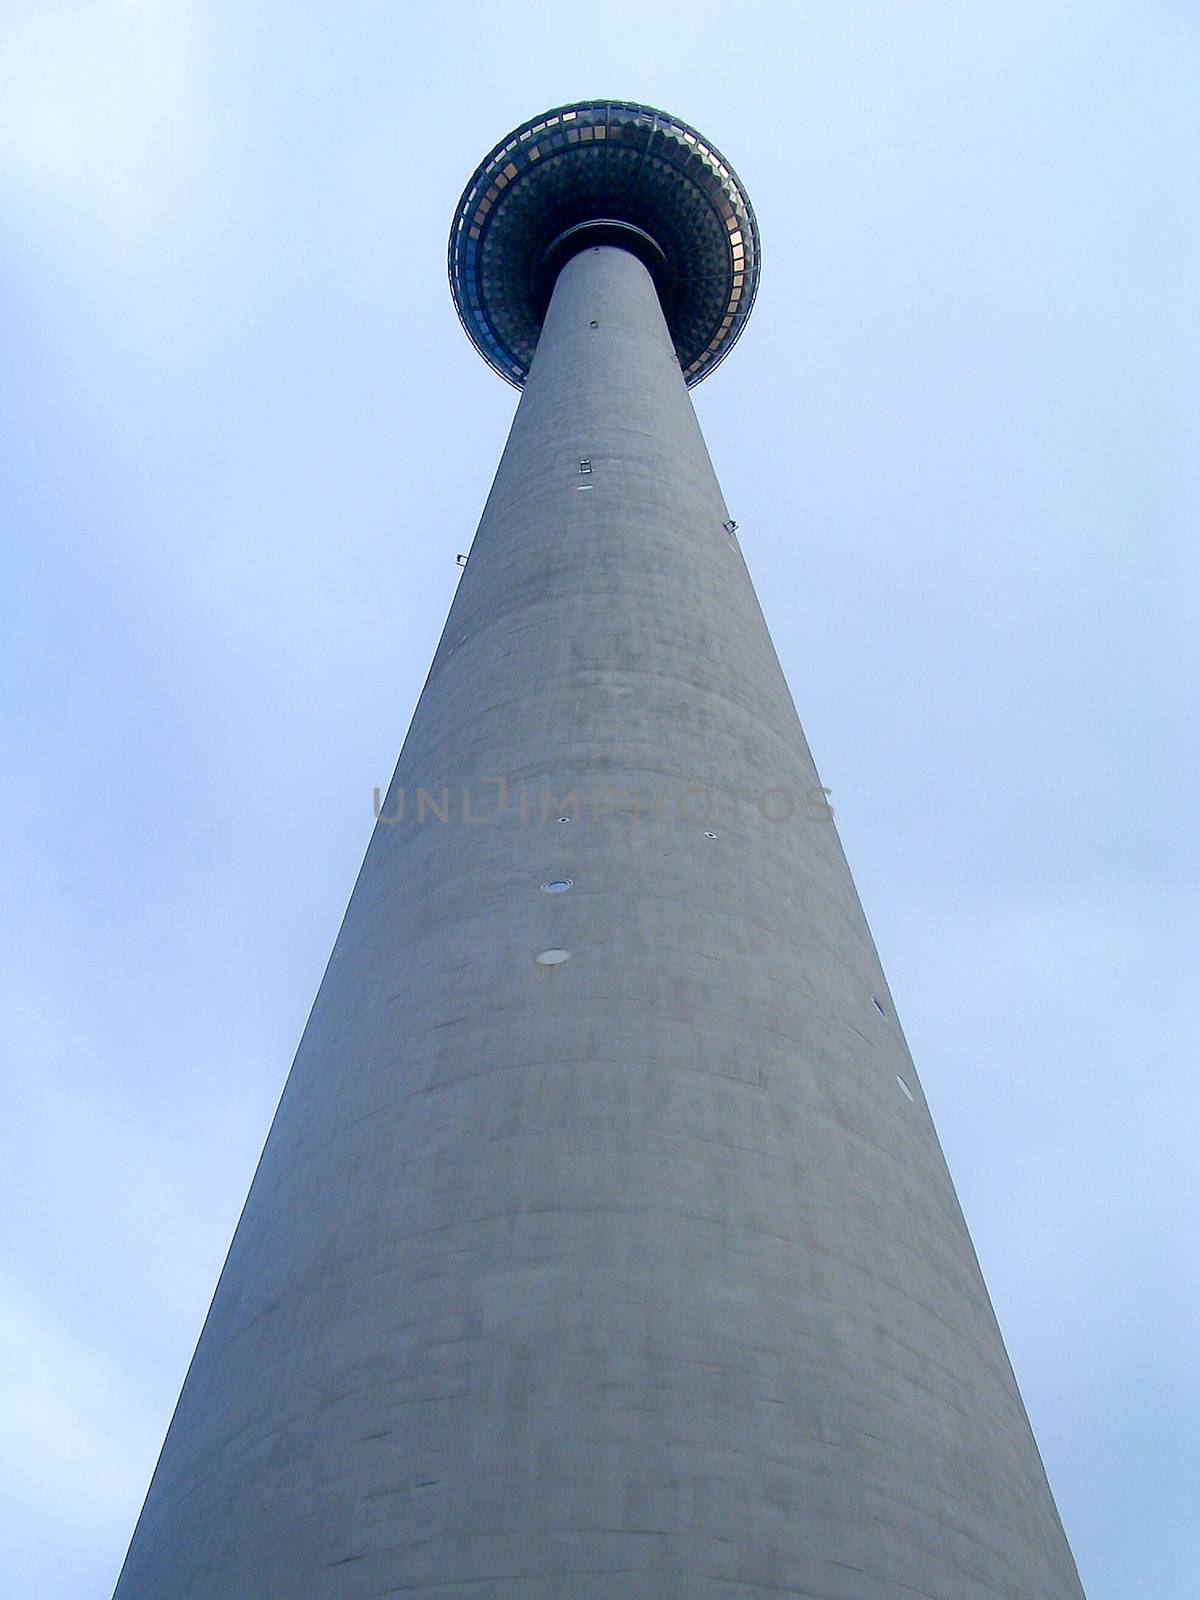 Fernsehturm (TV Tower) in Alexanderplatz, Berlin, Germany